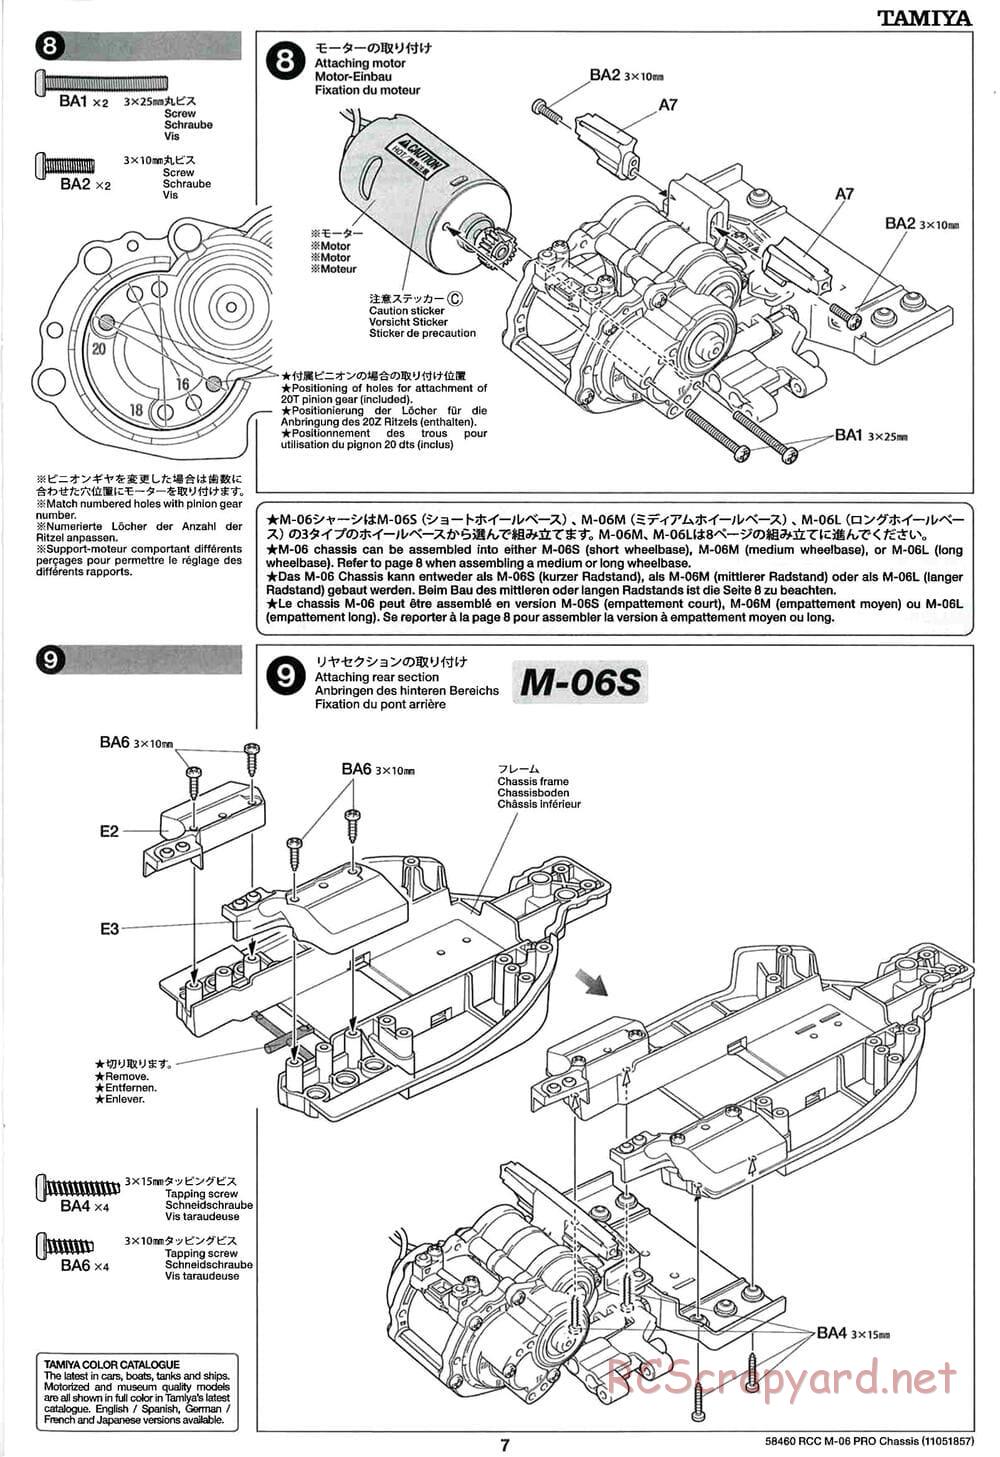 Tamiya - M-06 Pro Chassis - Manual - Page 7